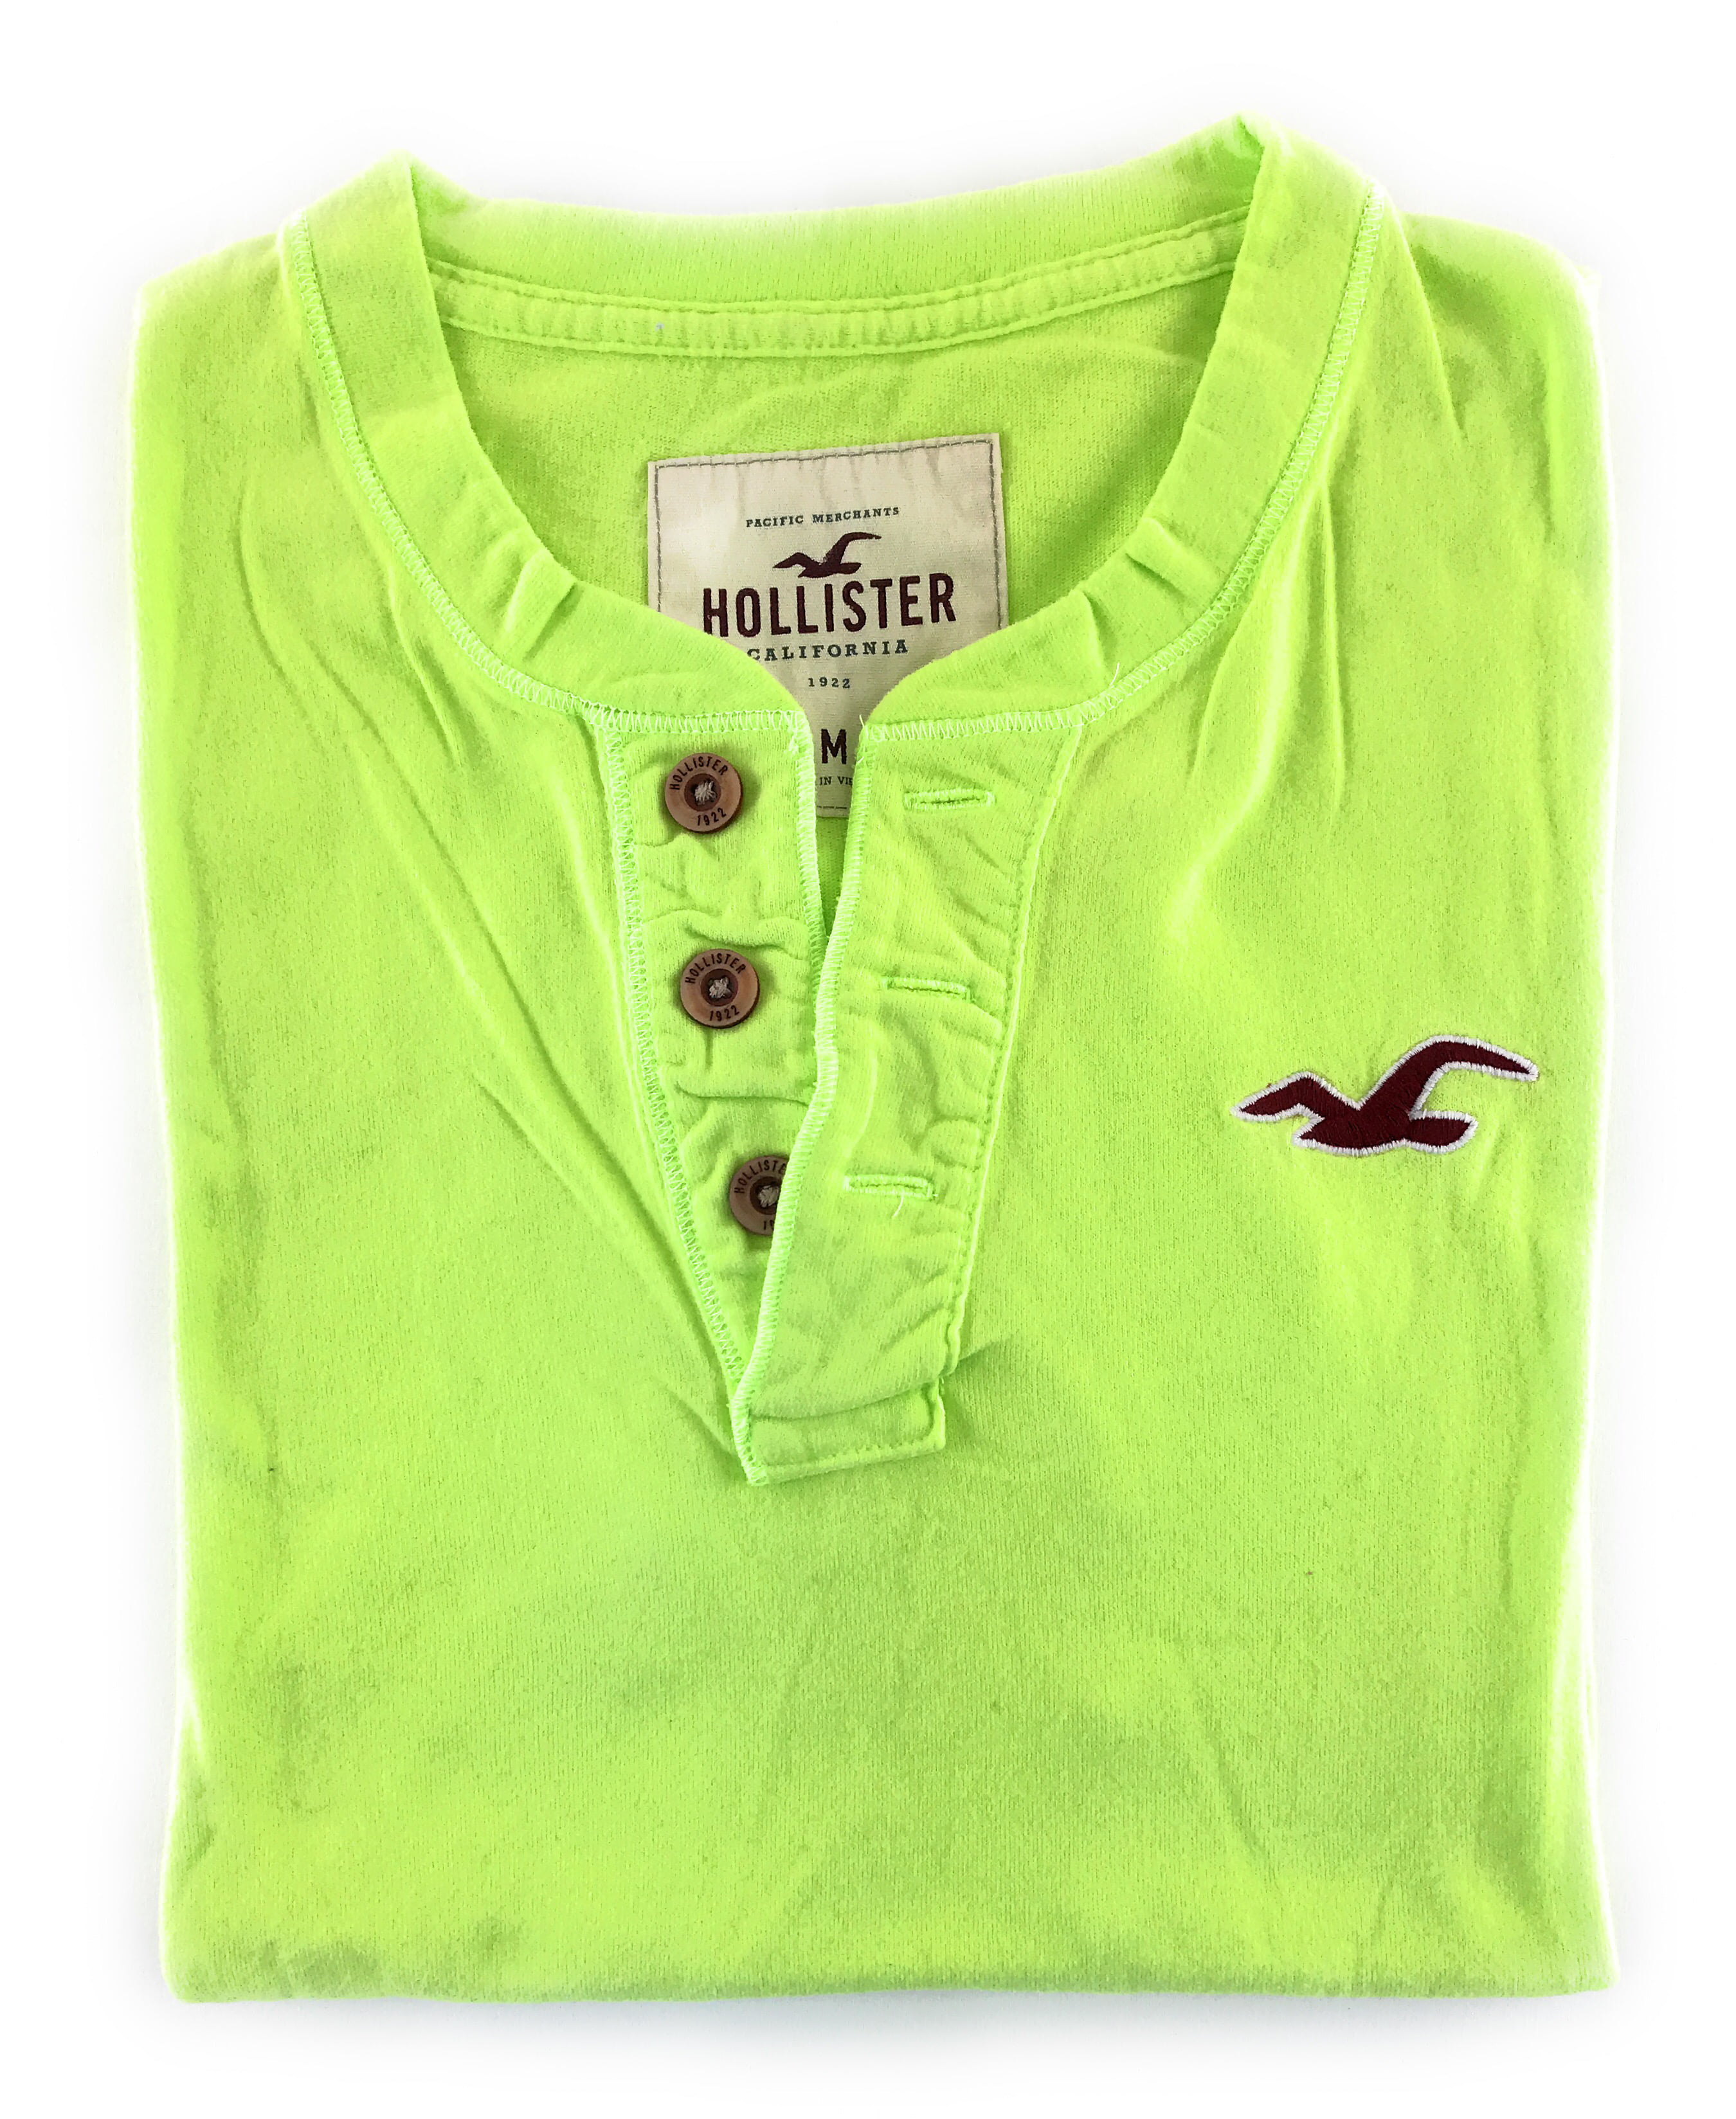 Hollister Slim Fit Henley T-Shirt Chest Pocket Seagull Logo in